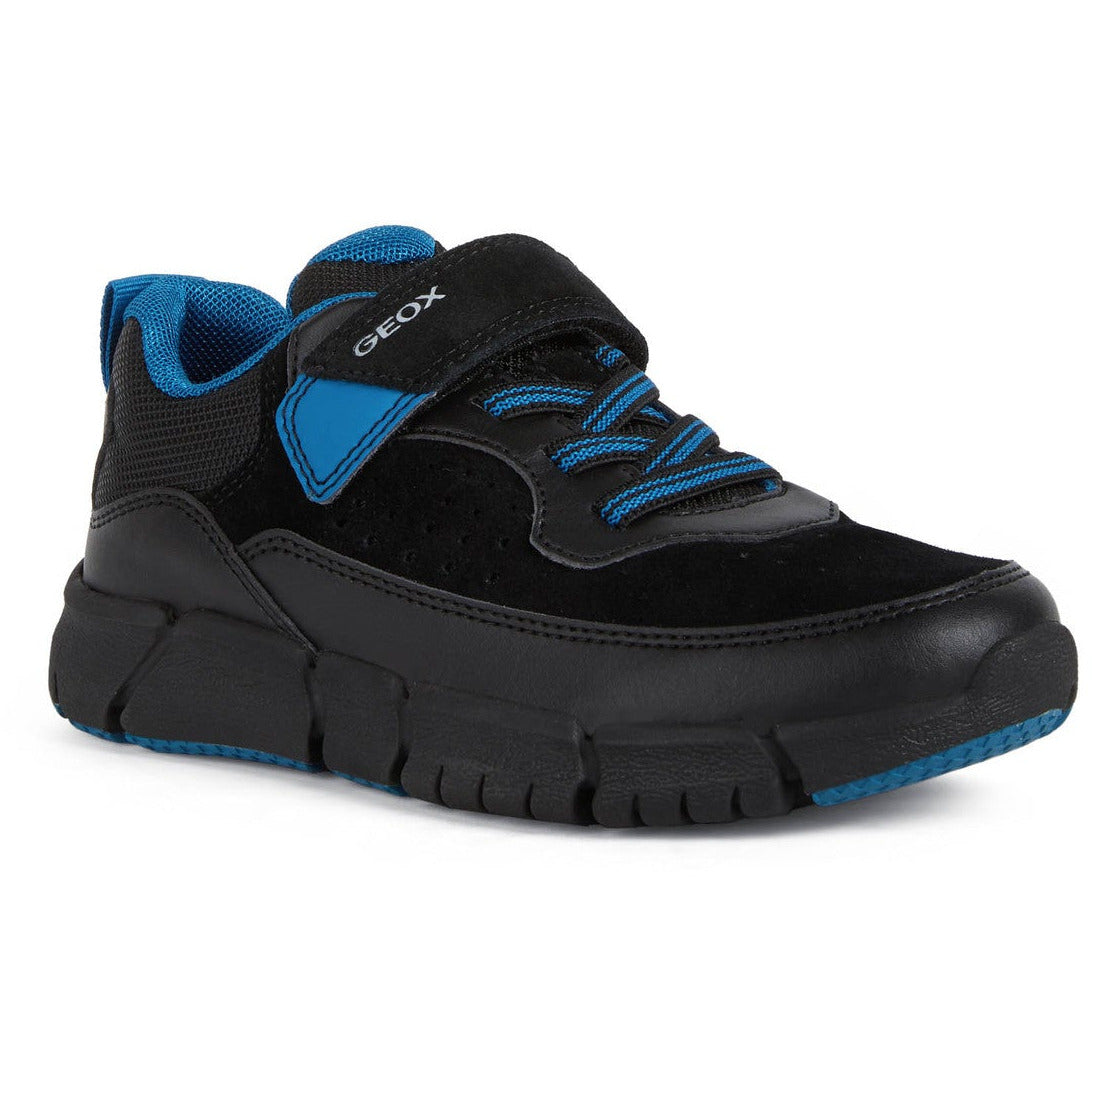 Geox Flexpyper (J269BA)- Boys Velcro Trainer in Black/Blue. Geox Shoes | Childrens Shoe Fitting | Wisemans | Bantry | West Cork | Ireland